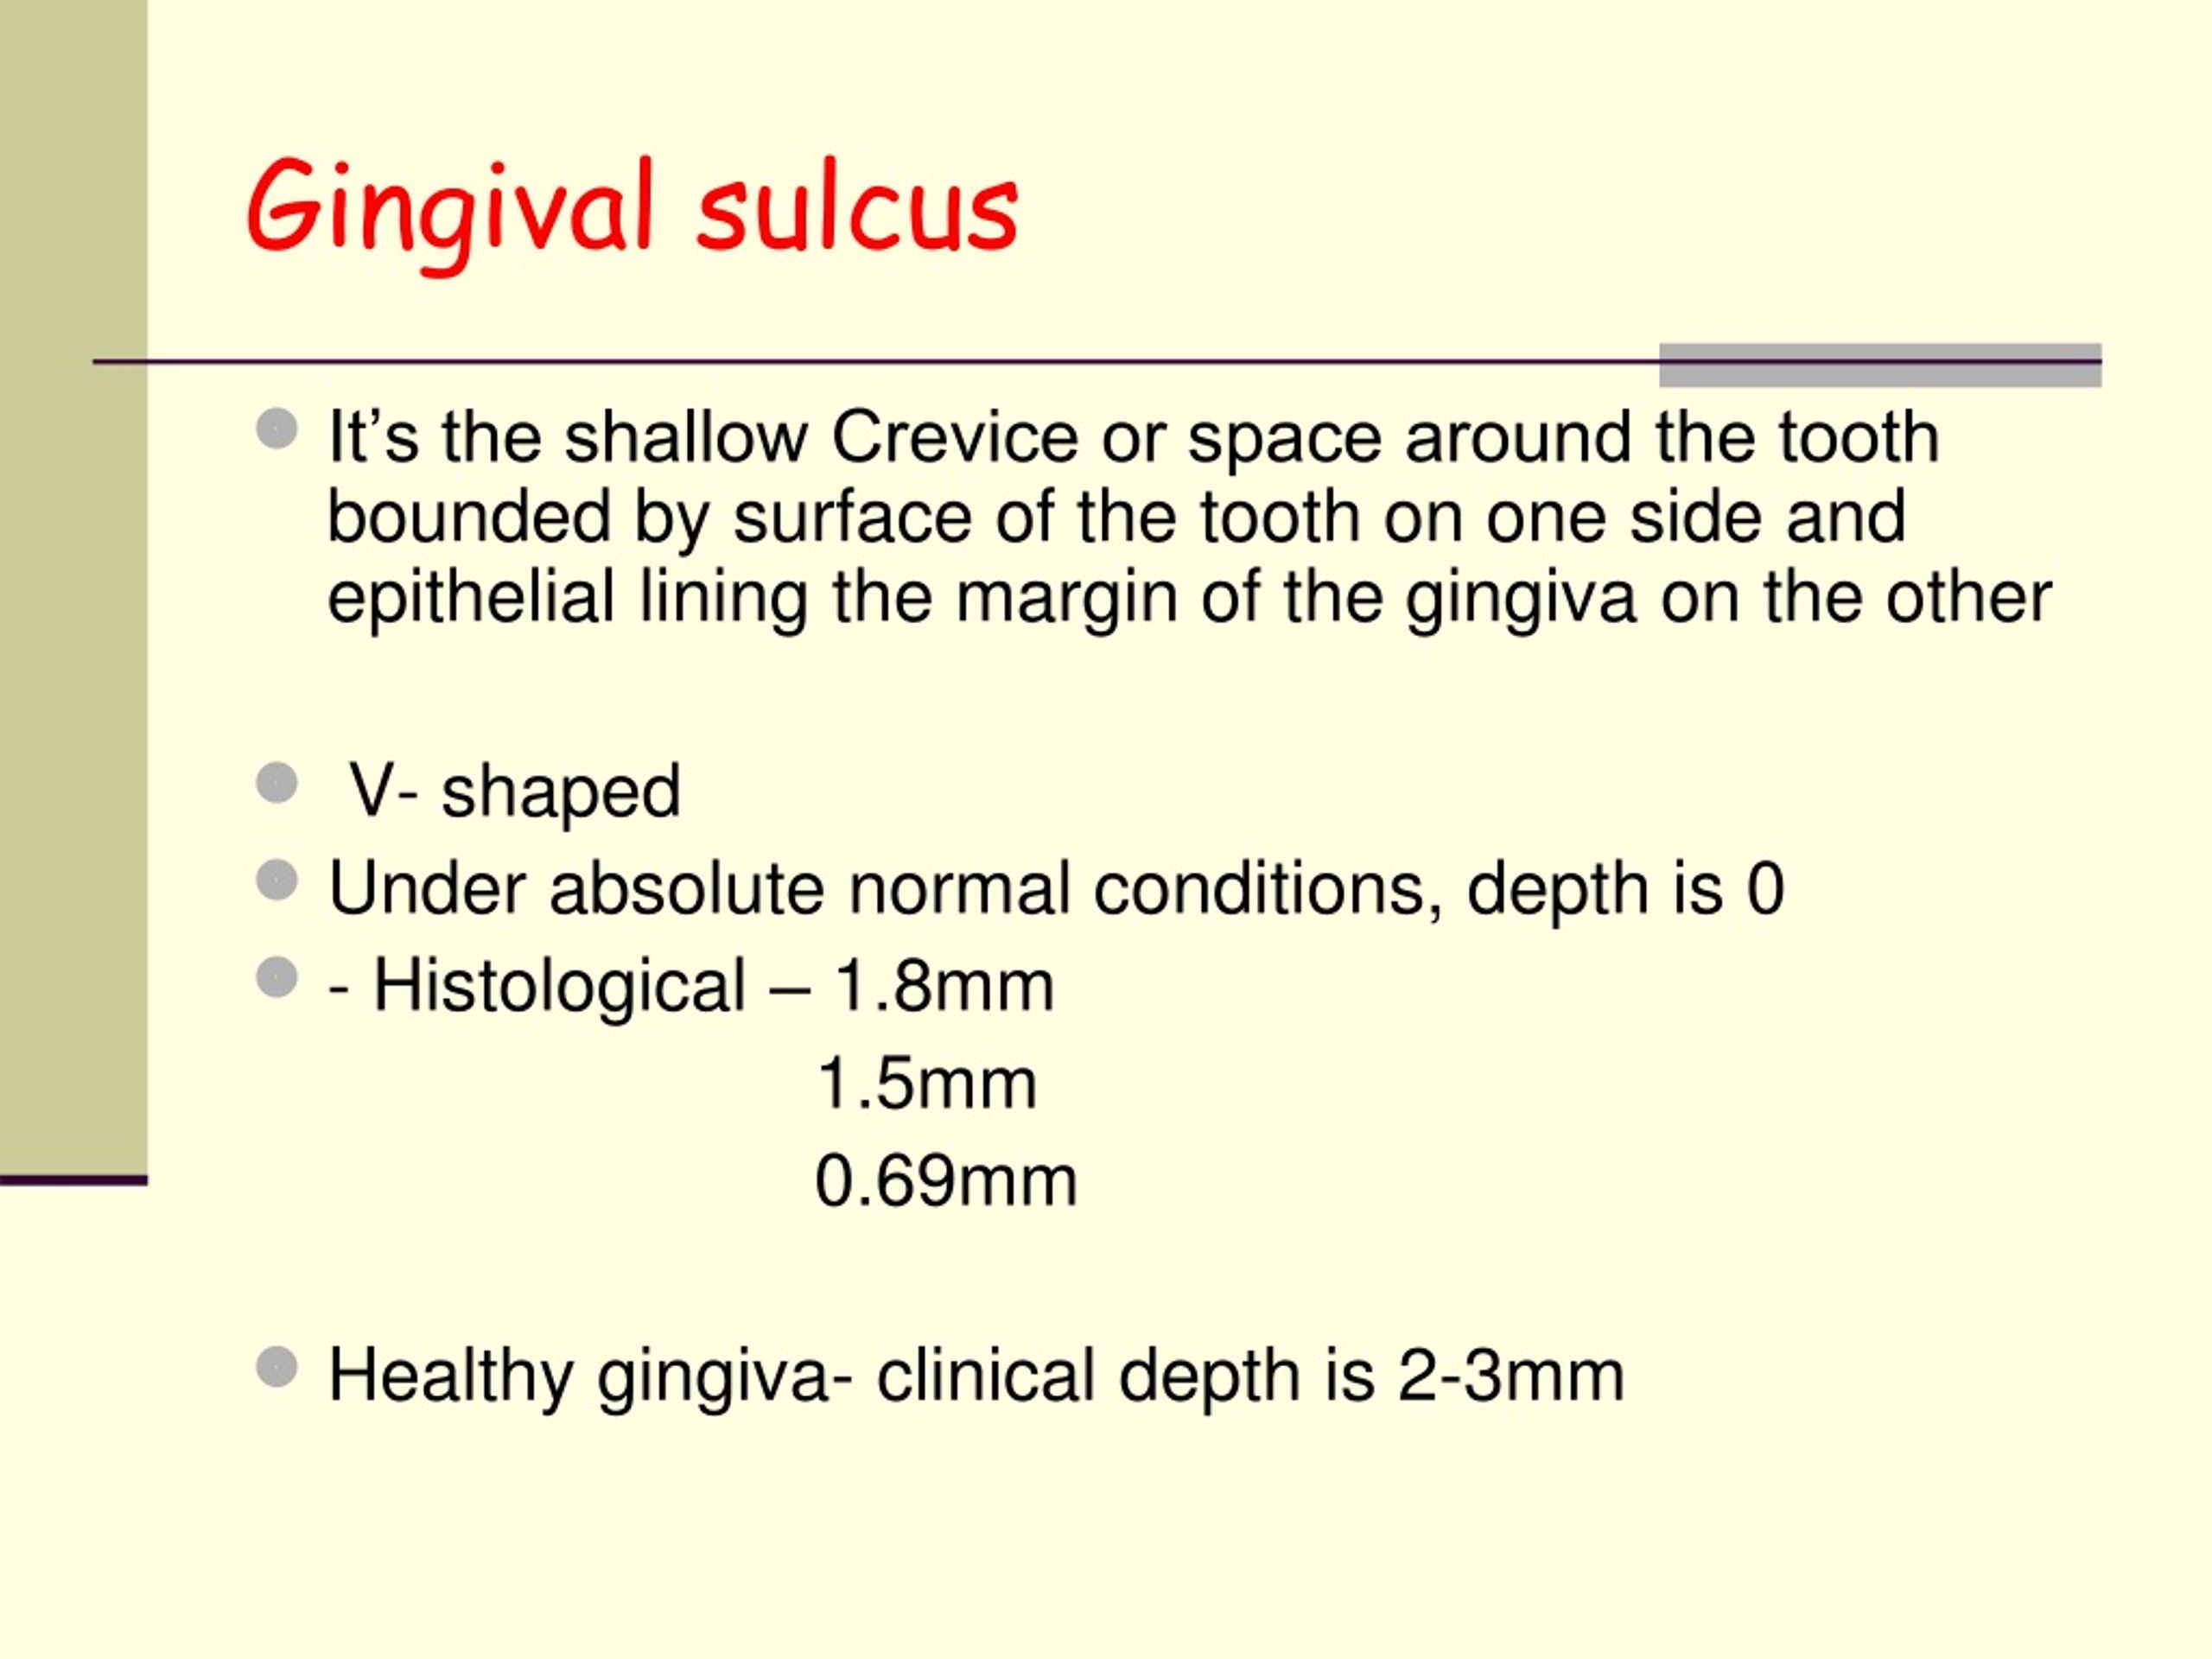 gingival sulcus depth